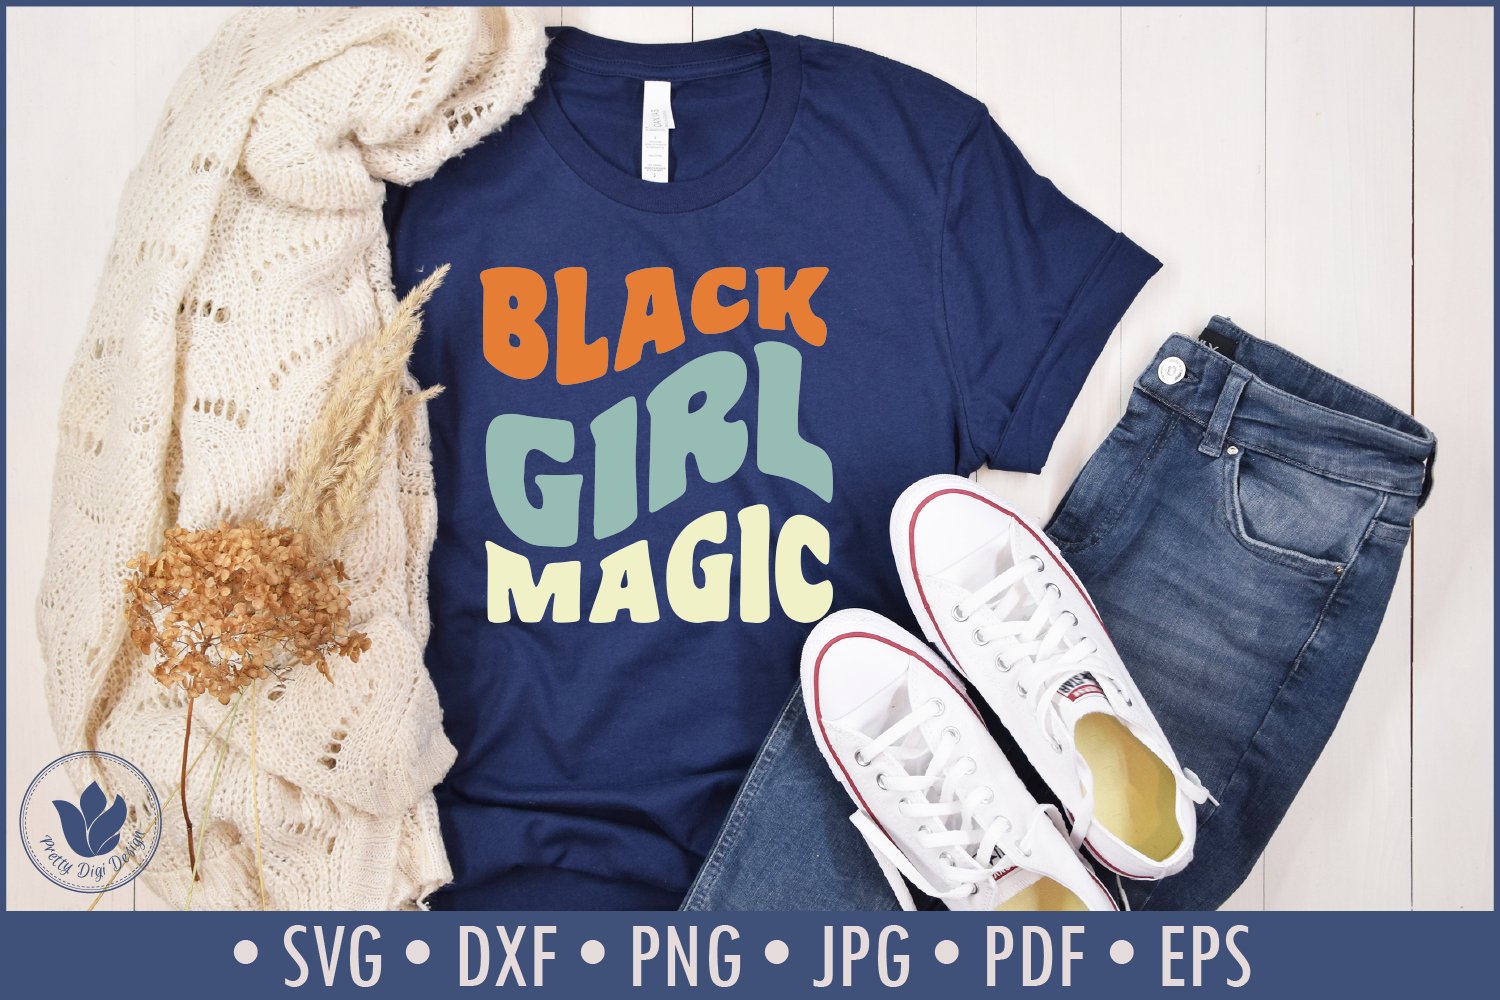 Blue T-shirt with a multi-colour print that says "Black Girl Magic".